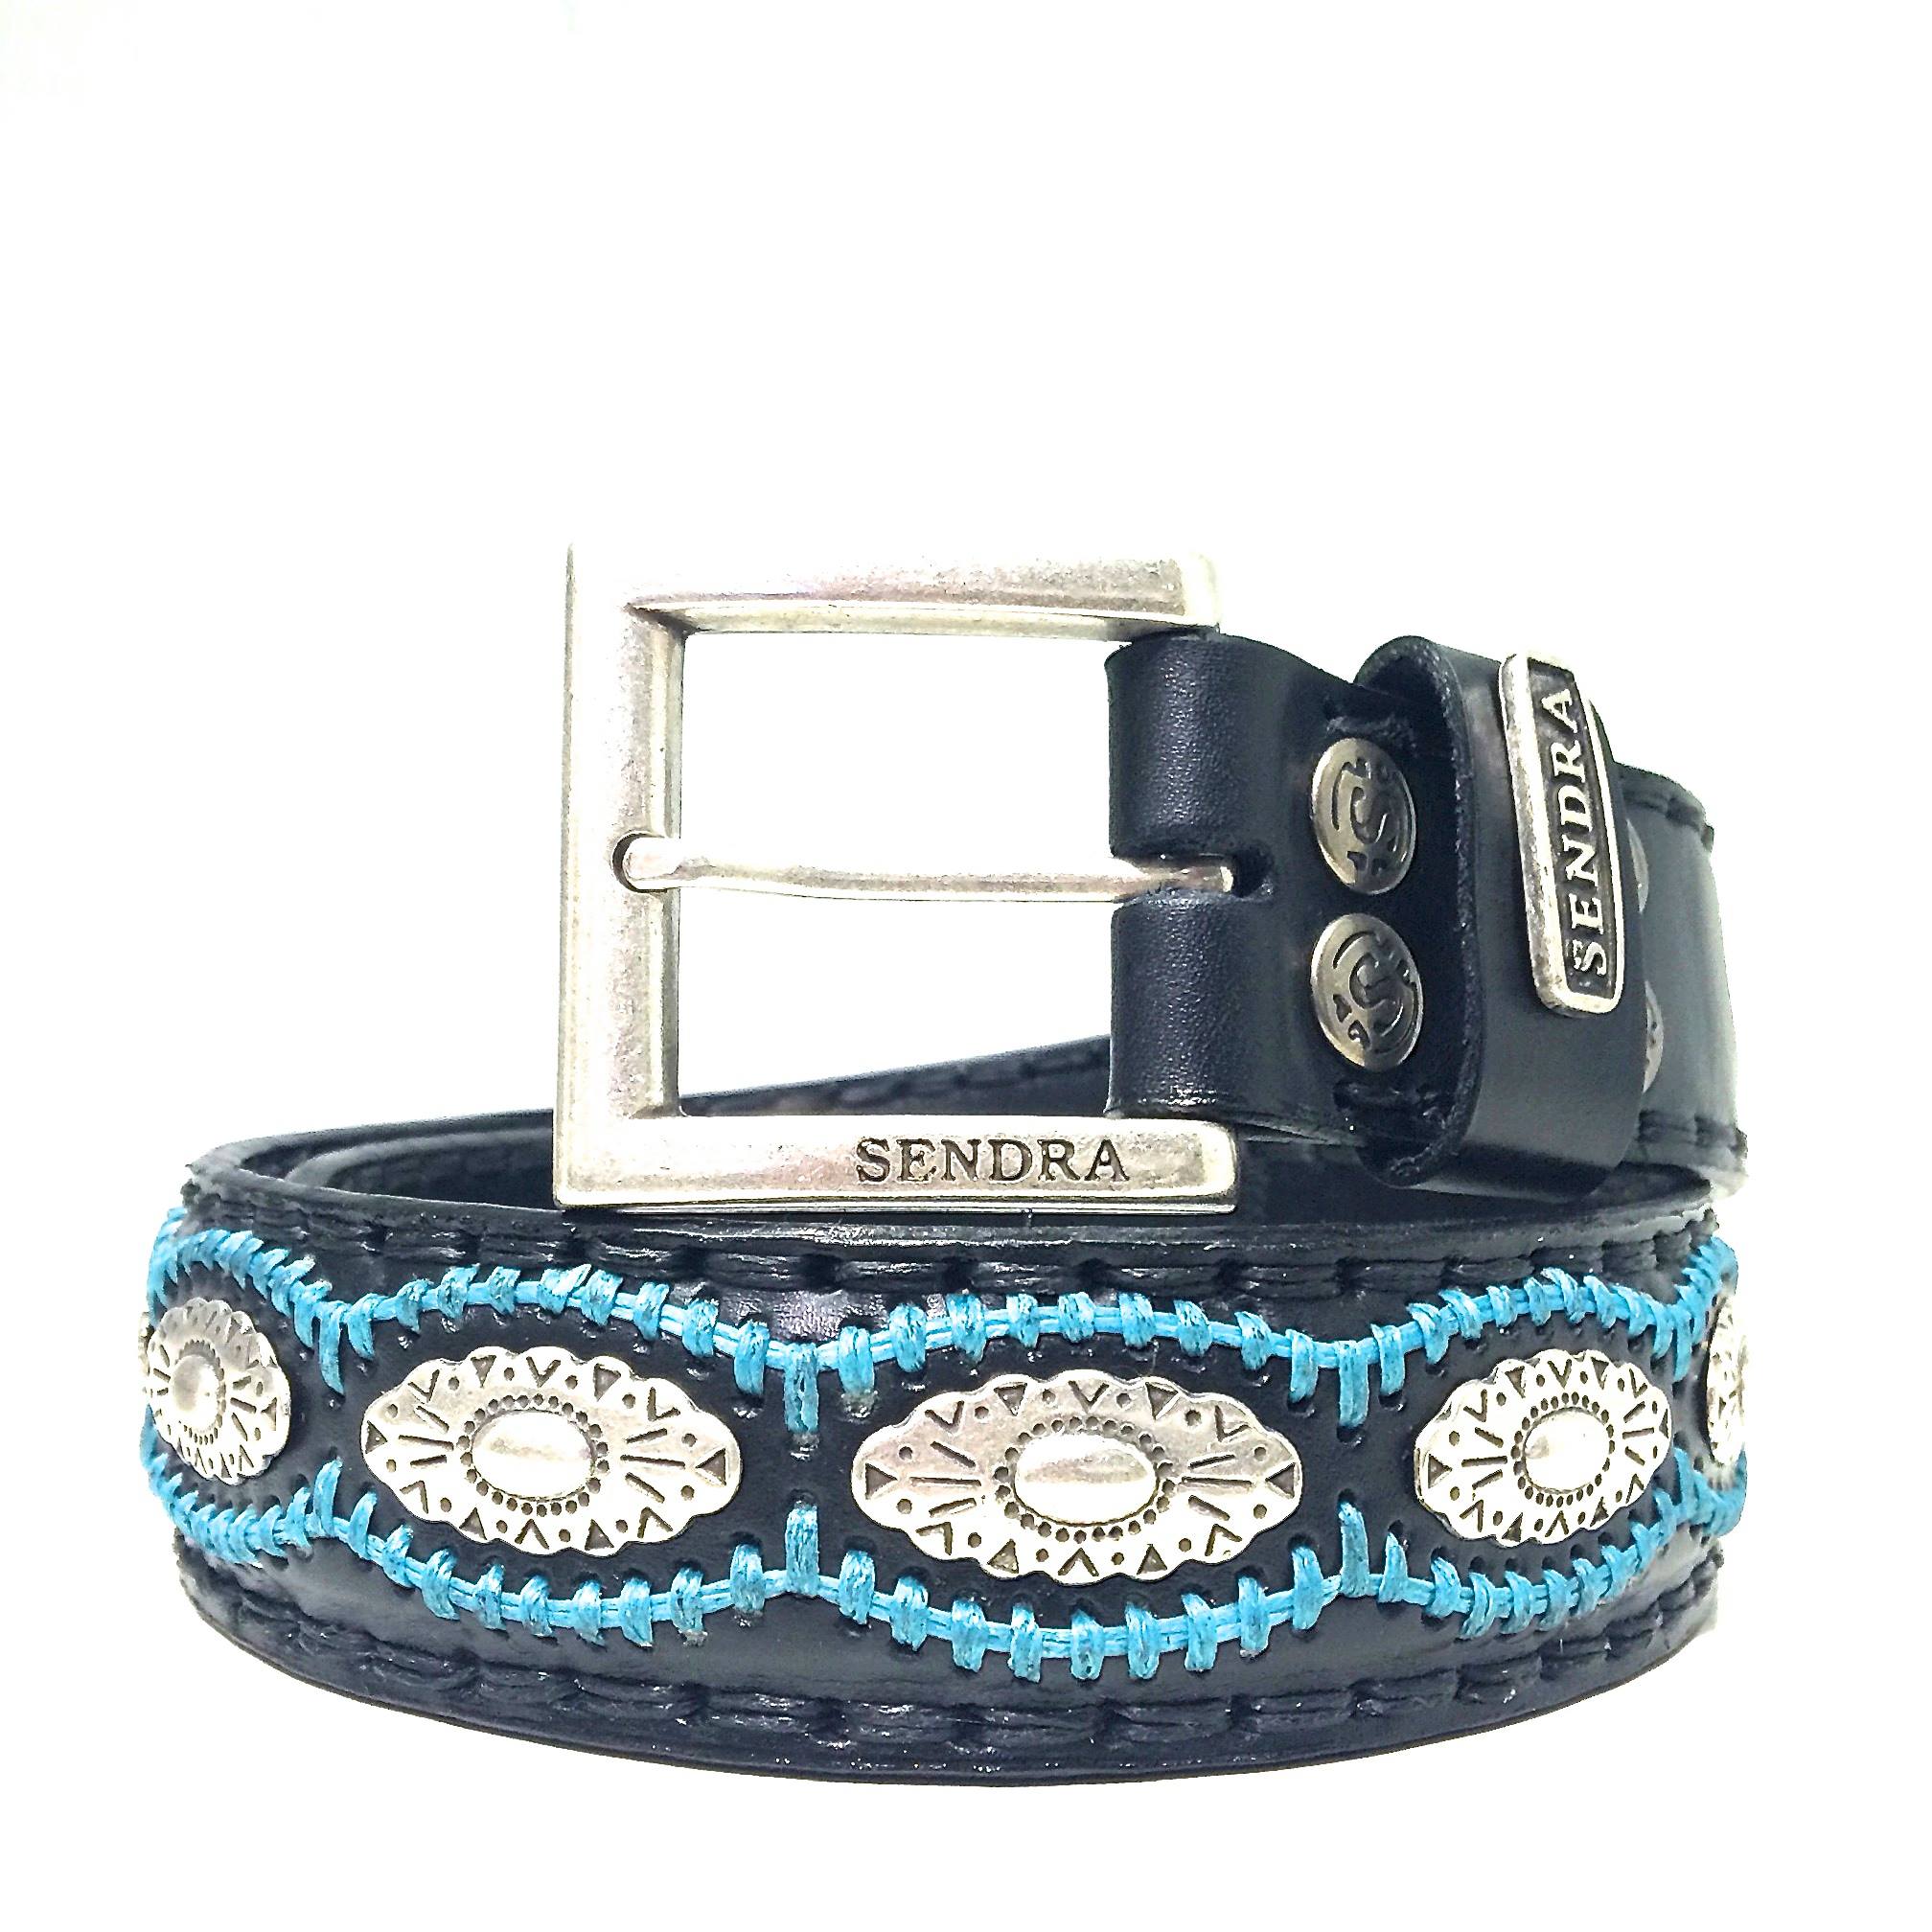 Sendra belt - 7606 zwart/turquoise stiksel